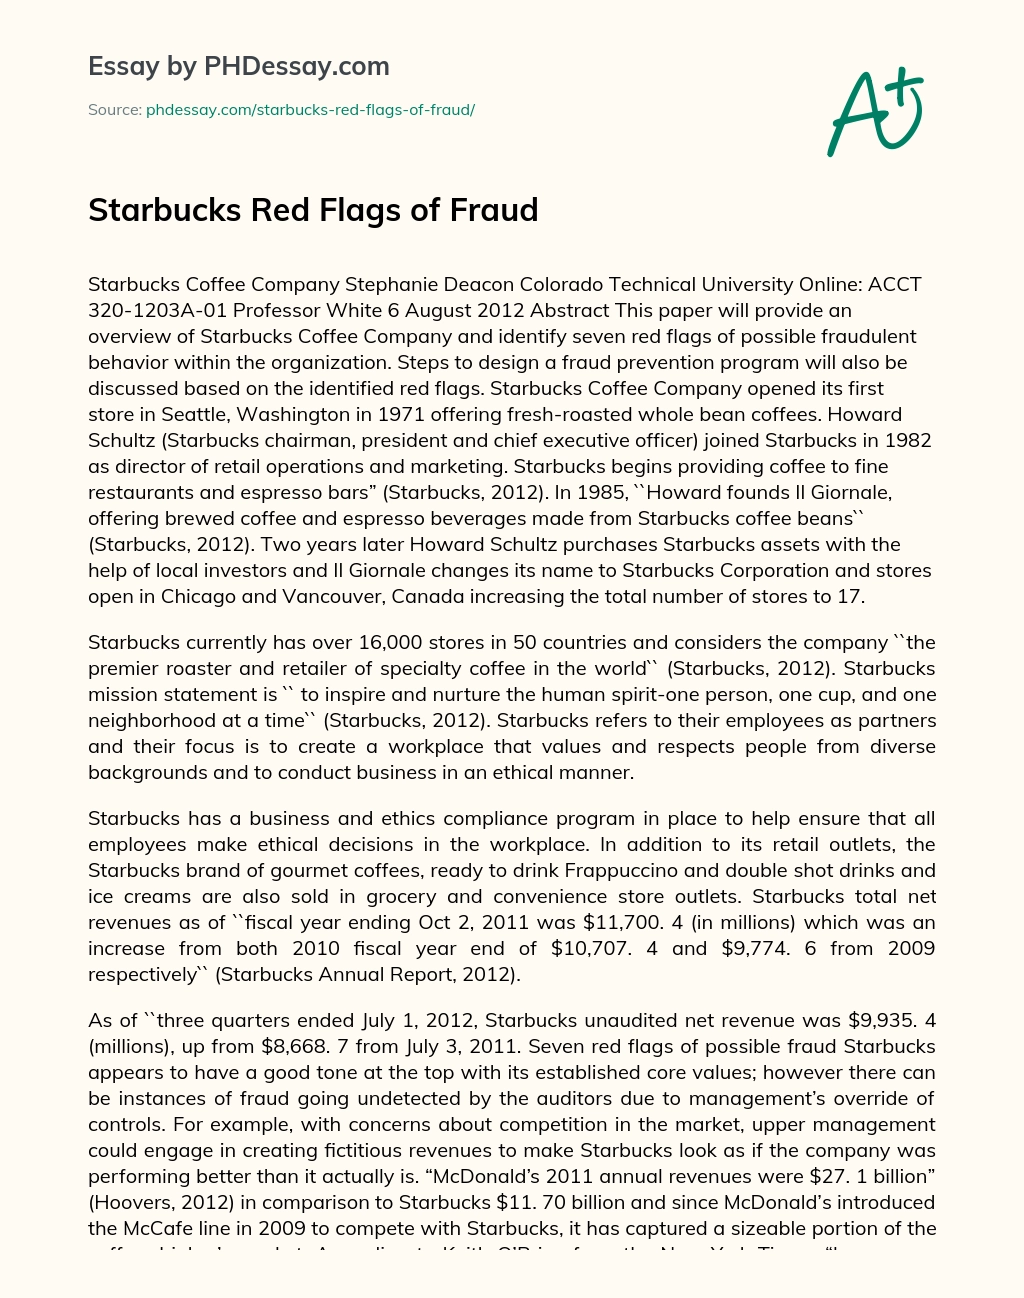 Starbucks Red Flags of Fraud essay